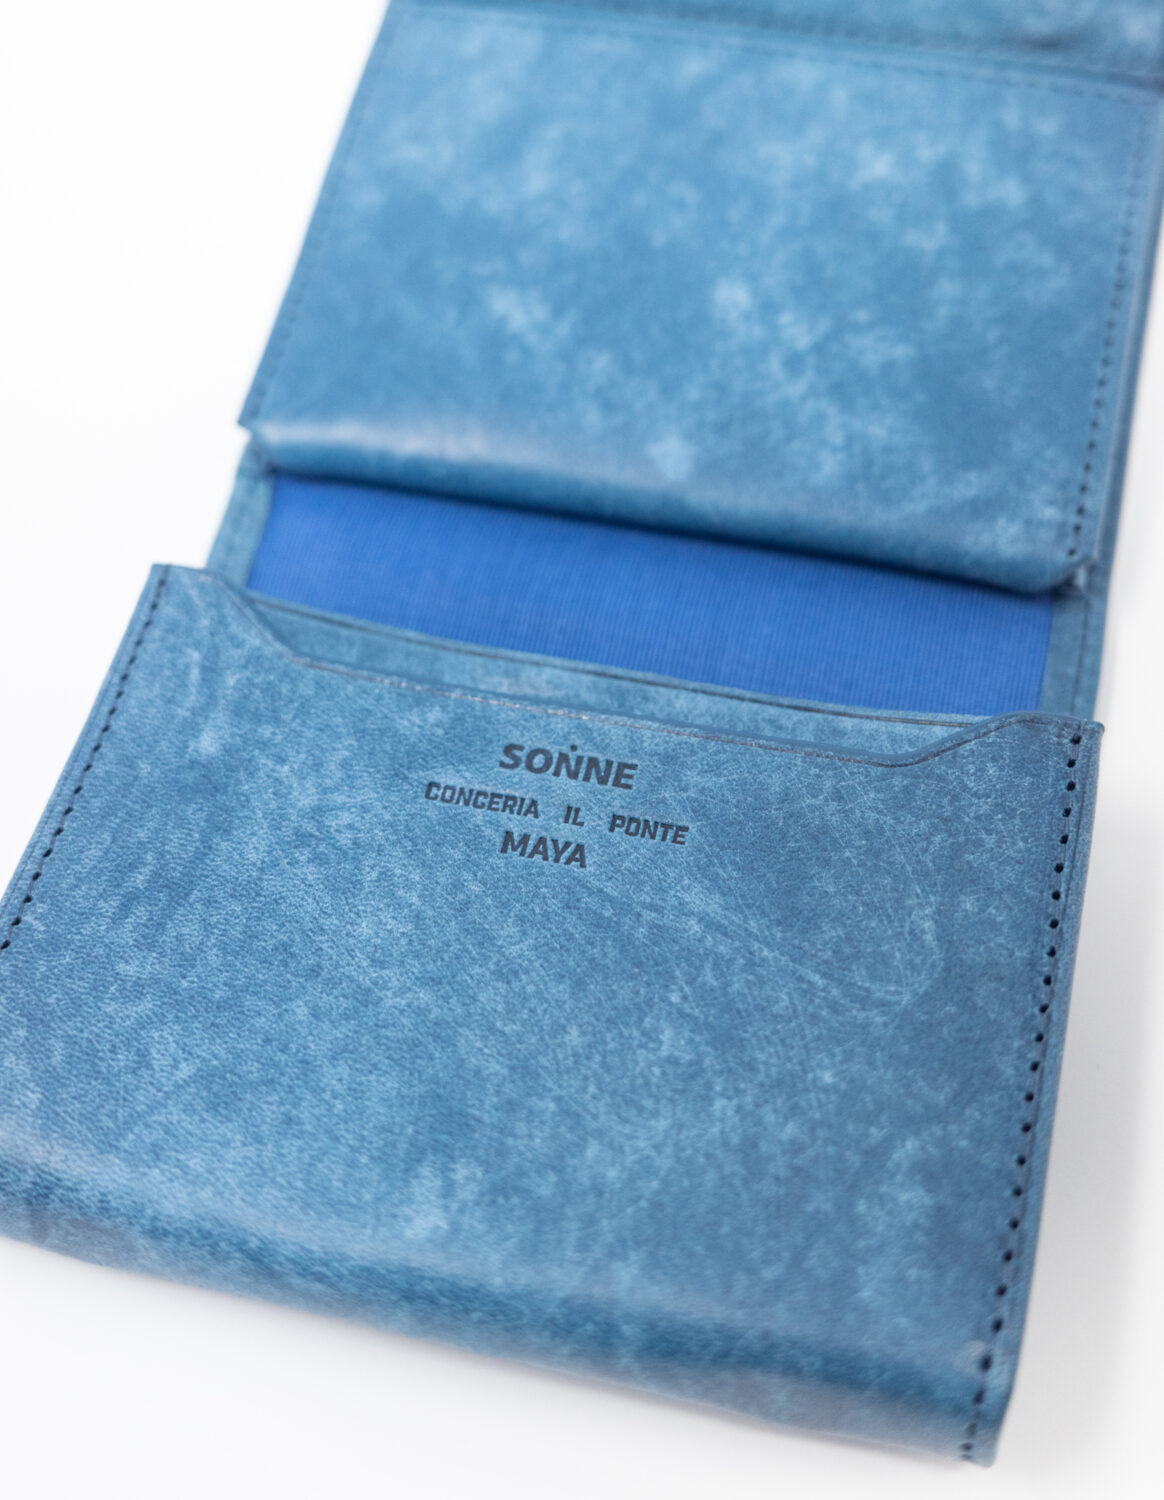 SONNE(ゾンネ)のMAYA二つ折り財布の内装のロゴ